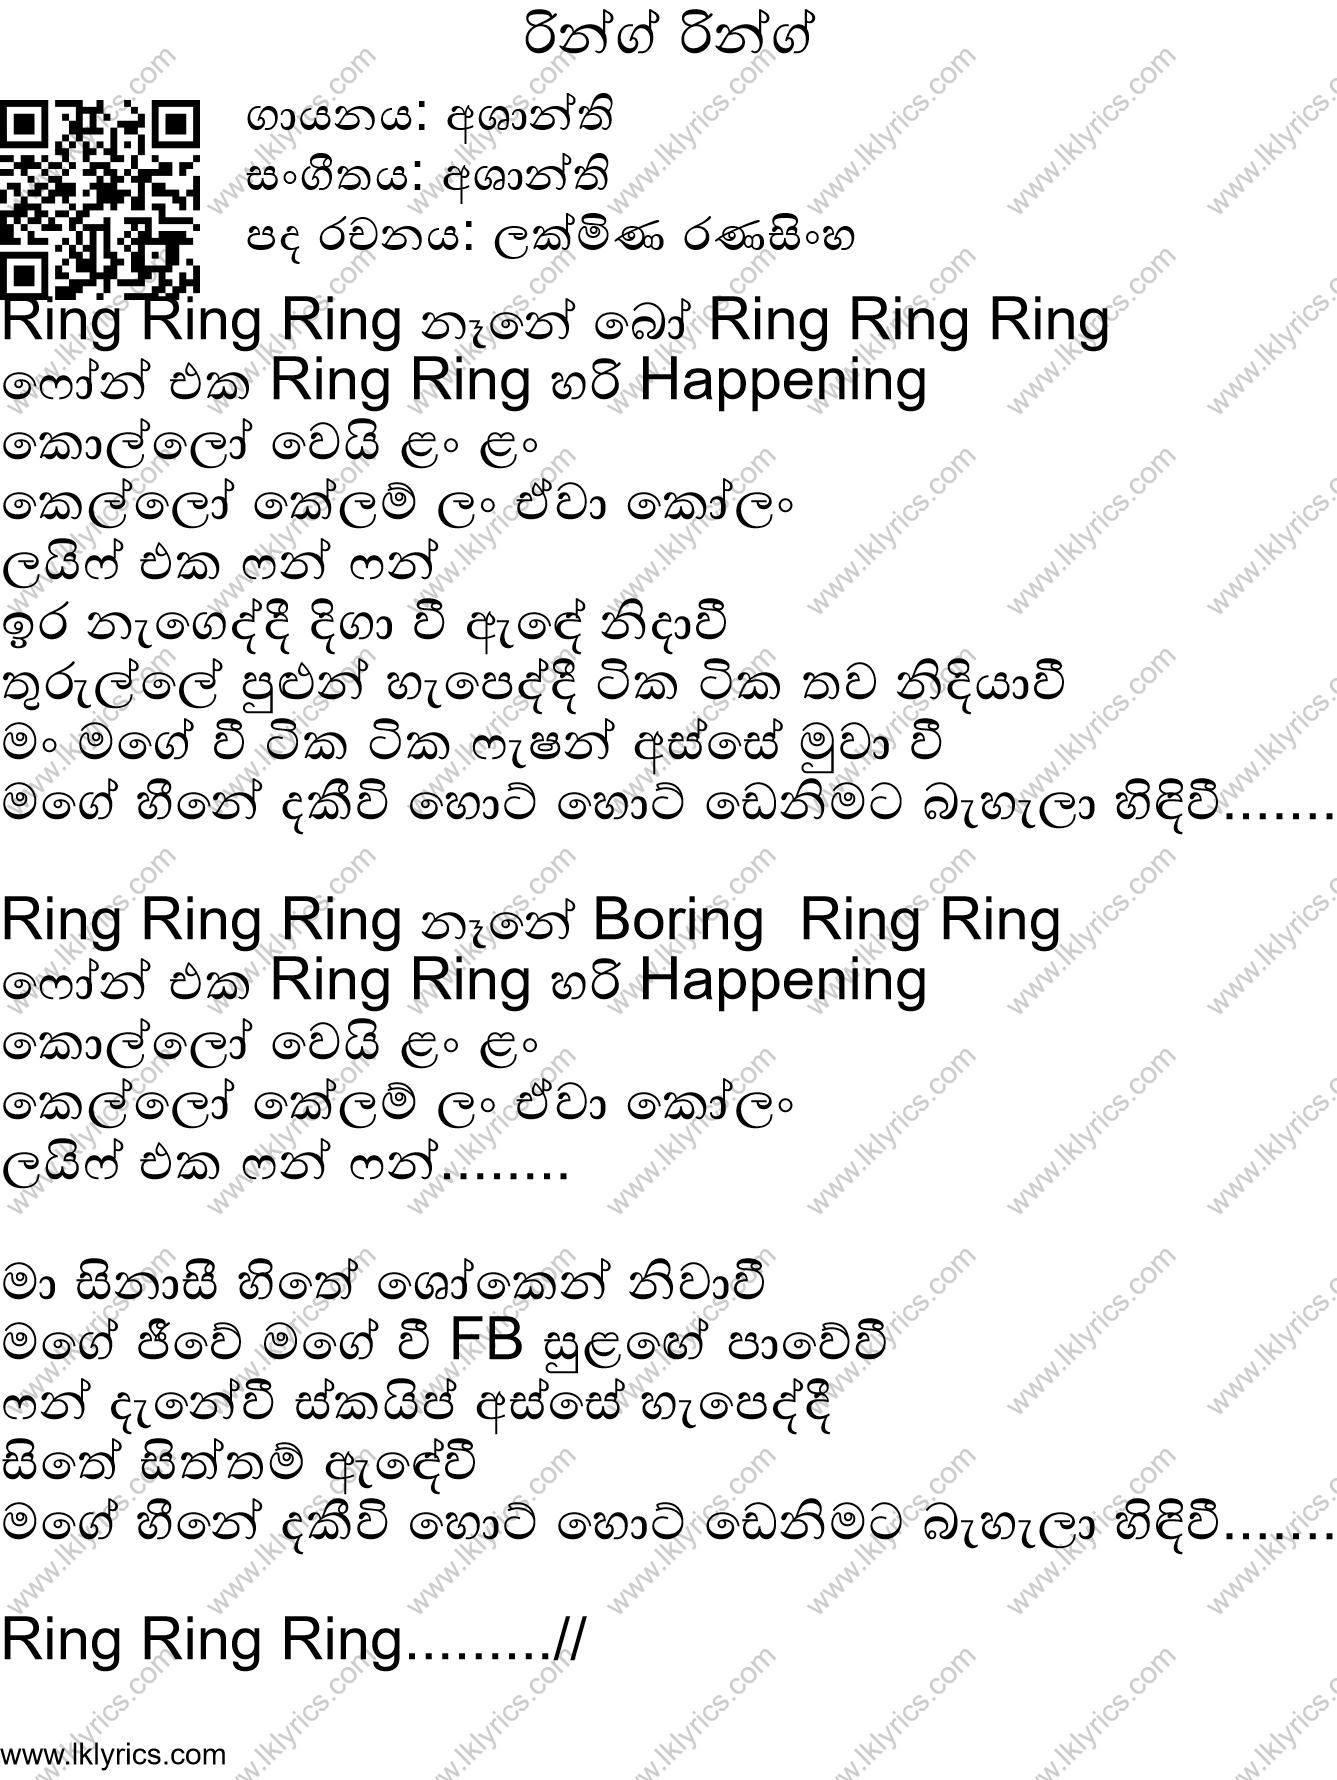 Ring Ring Ring නෑනේ බෝ Ring Ring Ring ෆෝන් එක Ring Ring හරි Happening කොල්ලෝ වෙයි ළං ළං කෙ...